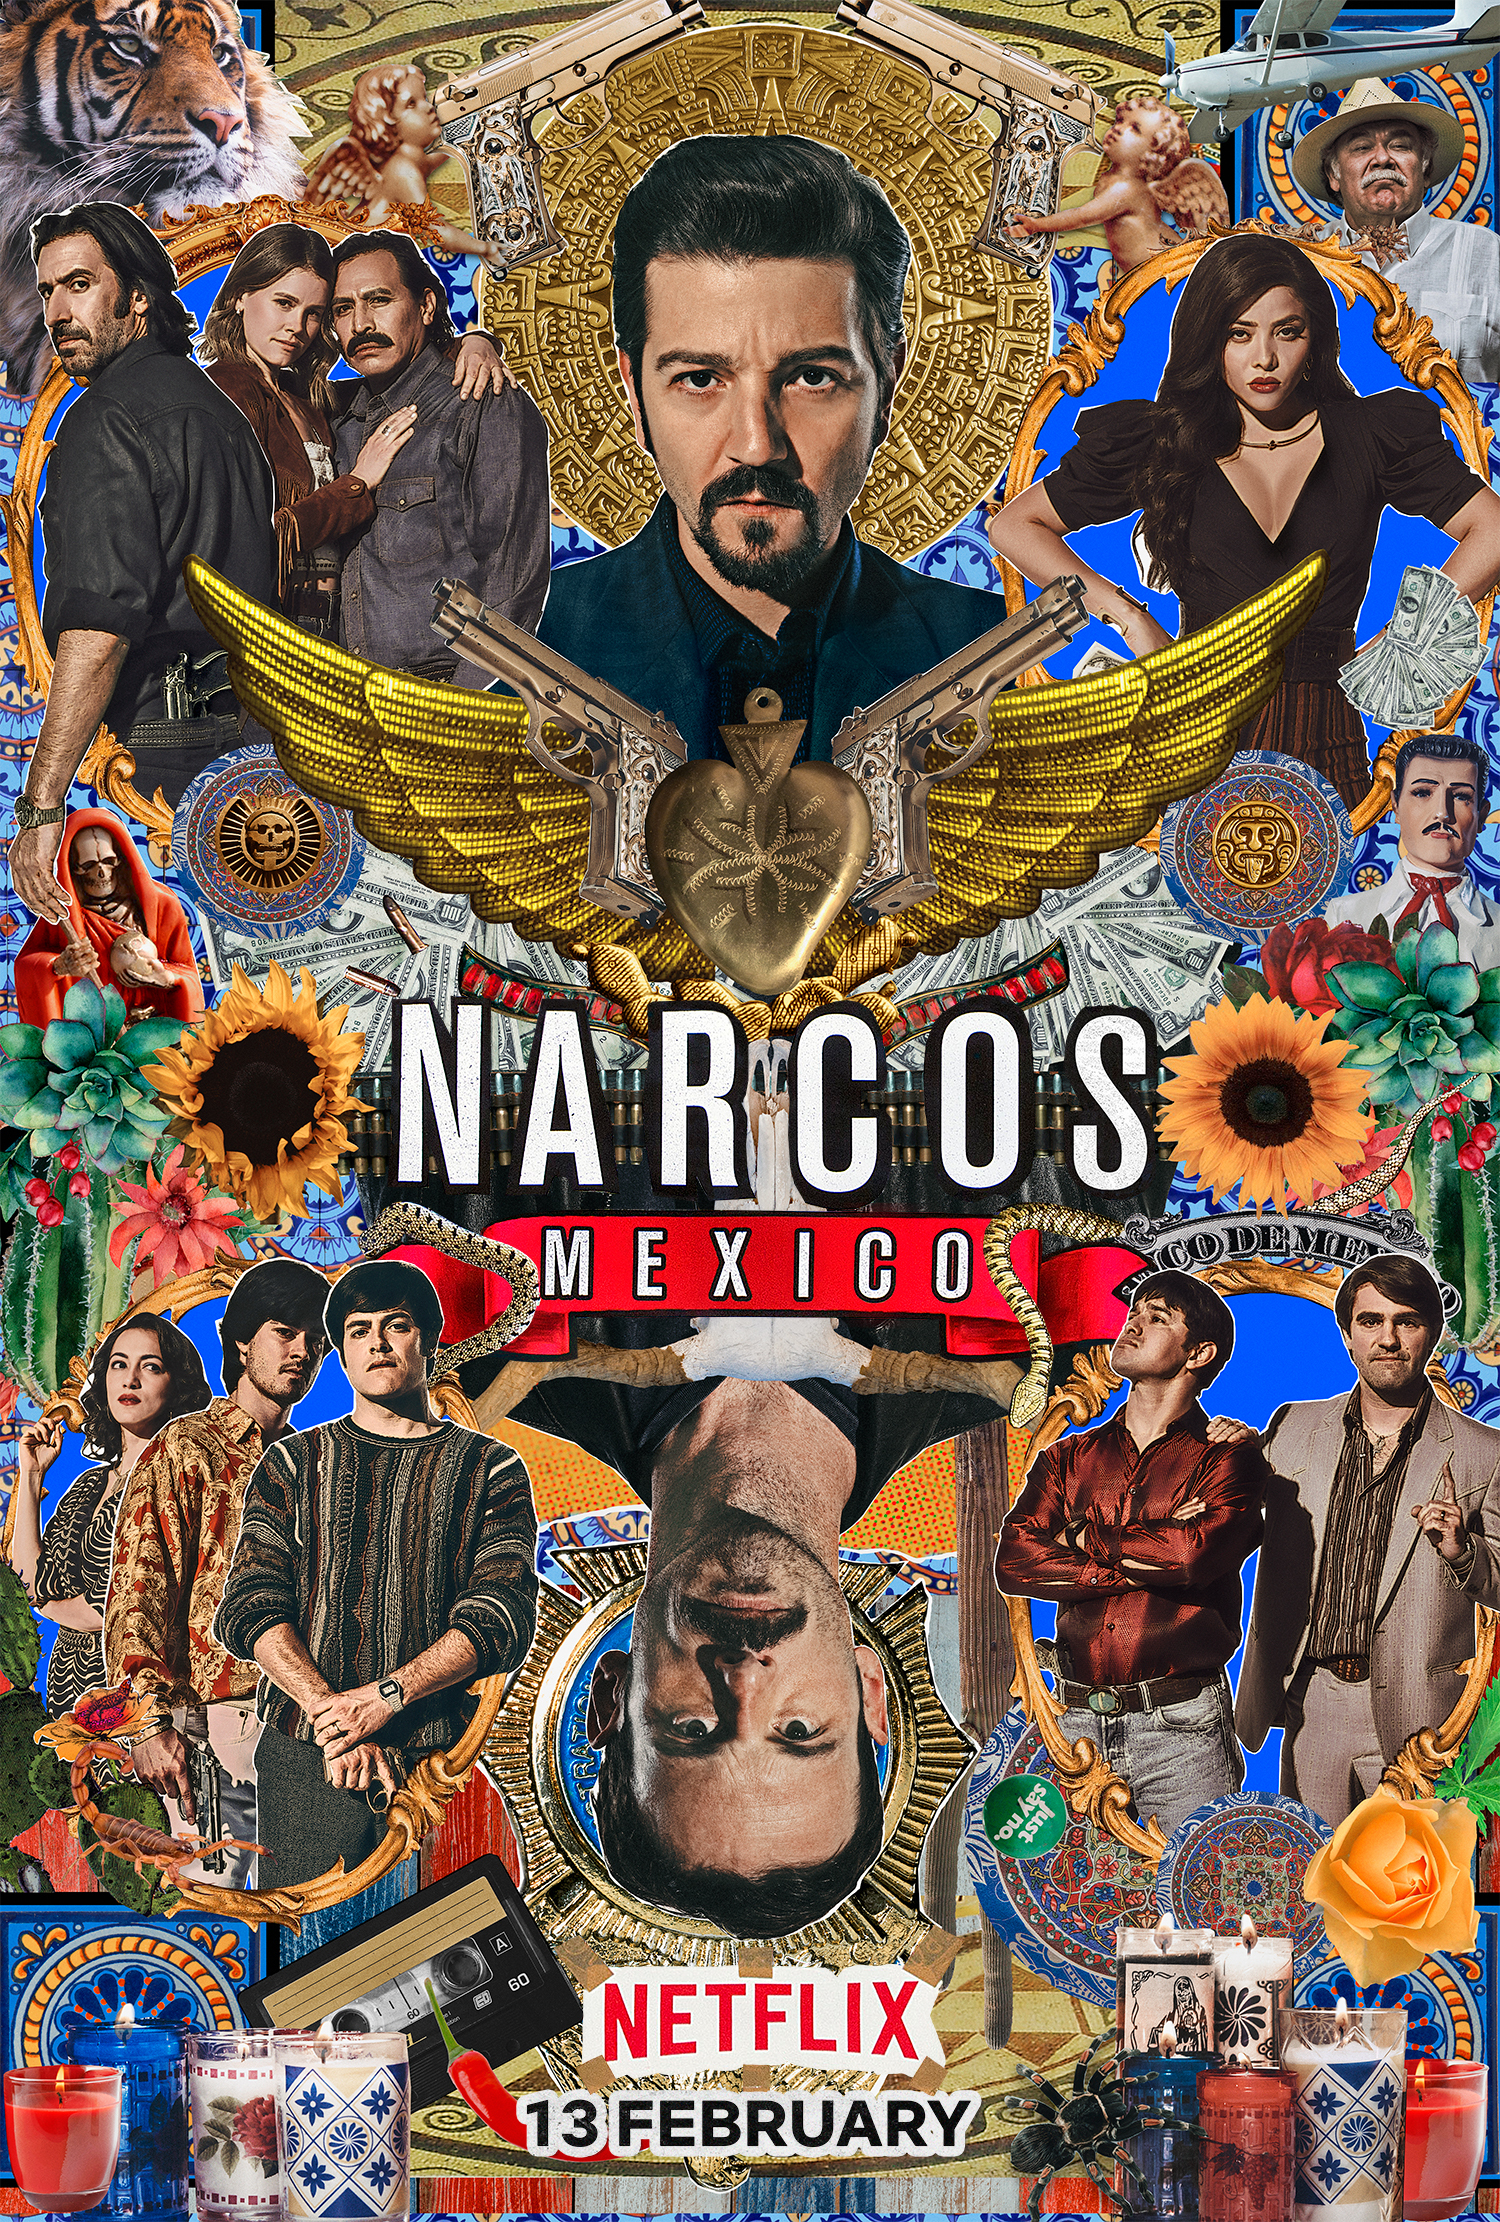 Stiahni si Seriál Narcos: Mexiko / Narcos: Mexico S02E08 (CZ)[TvRip][1080p][HEVC] = CSFD 86%